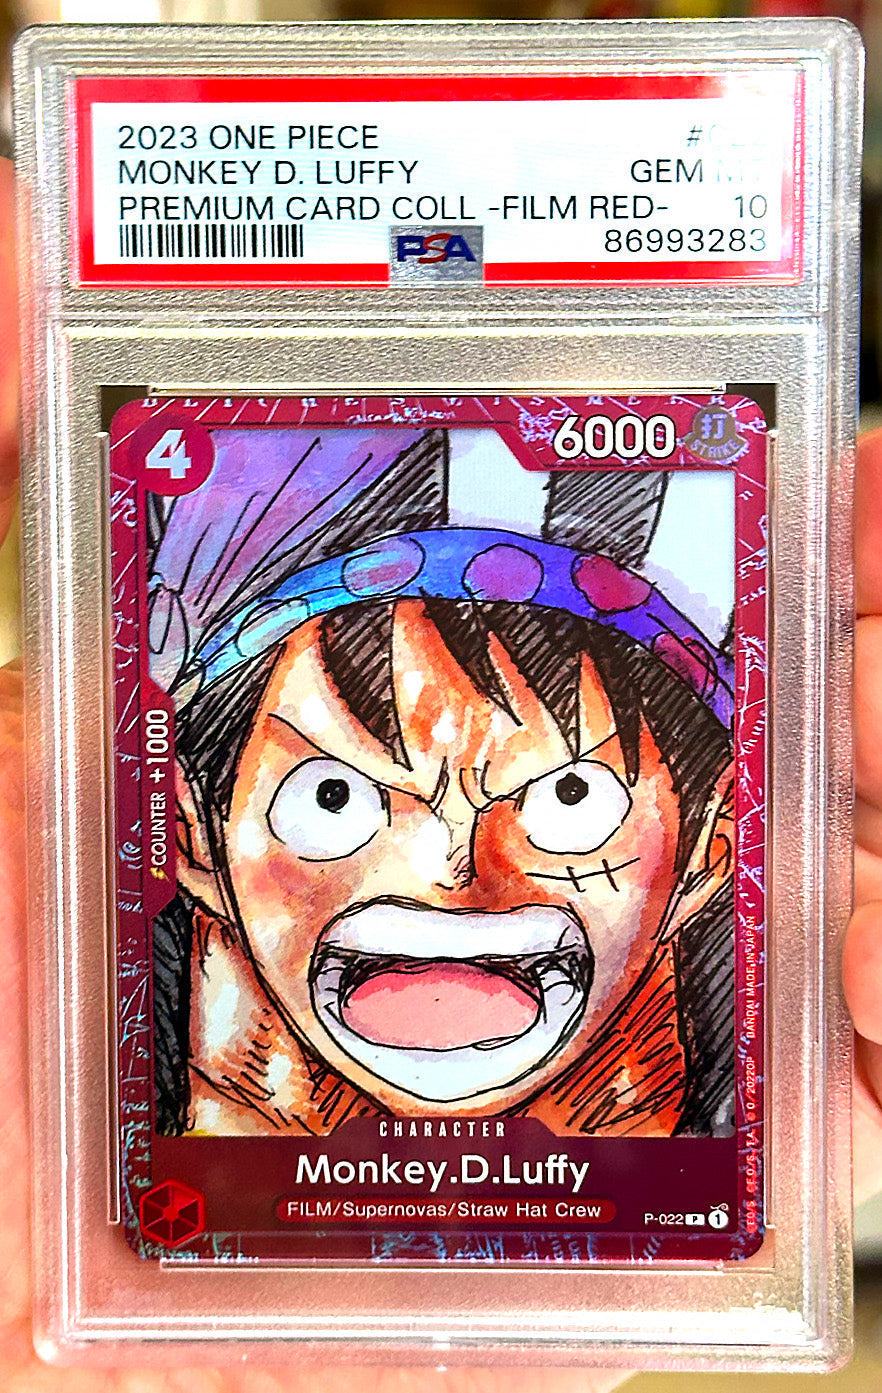 Monkey D. Luffy - Alternate Art - Premium Card Collection - P-022 - PSA 10